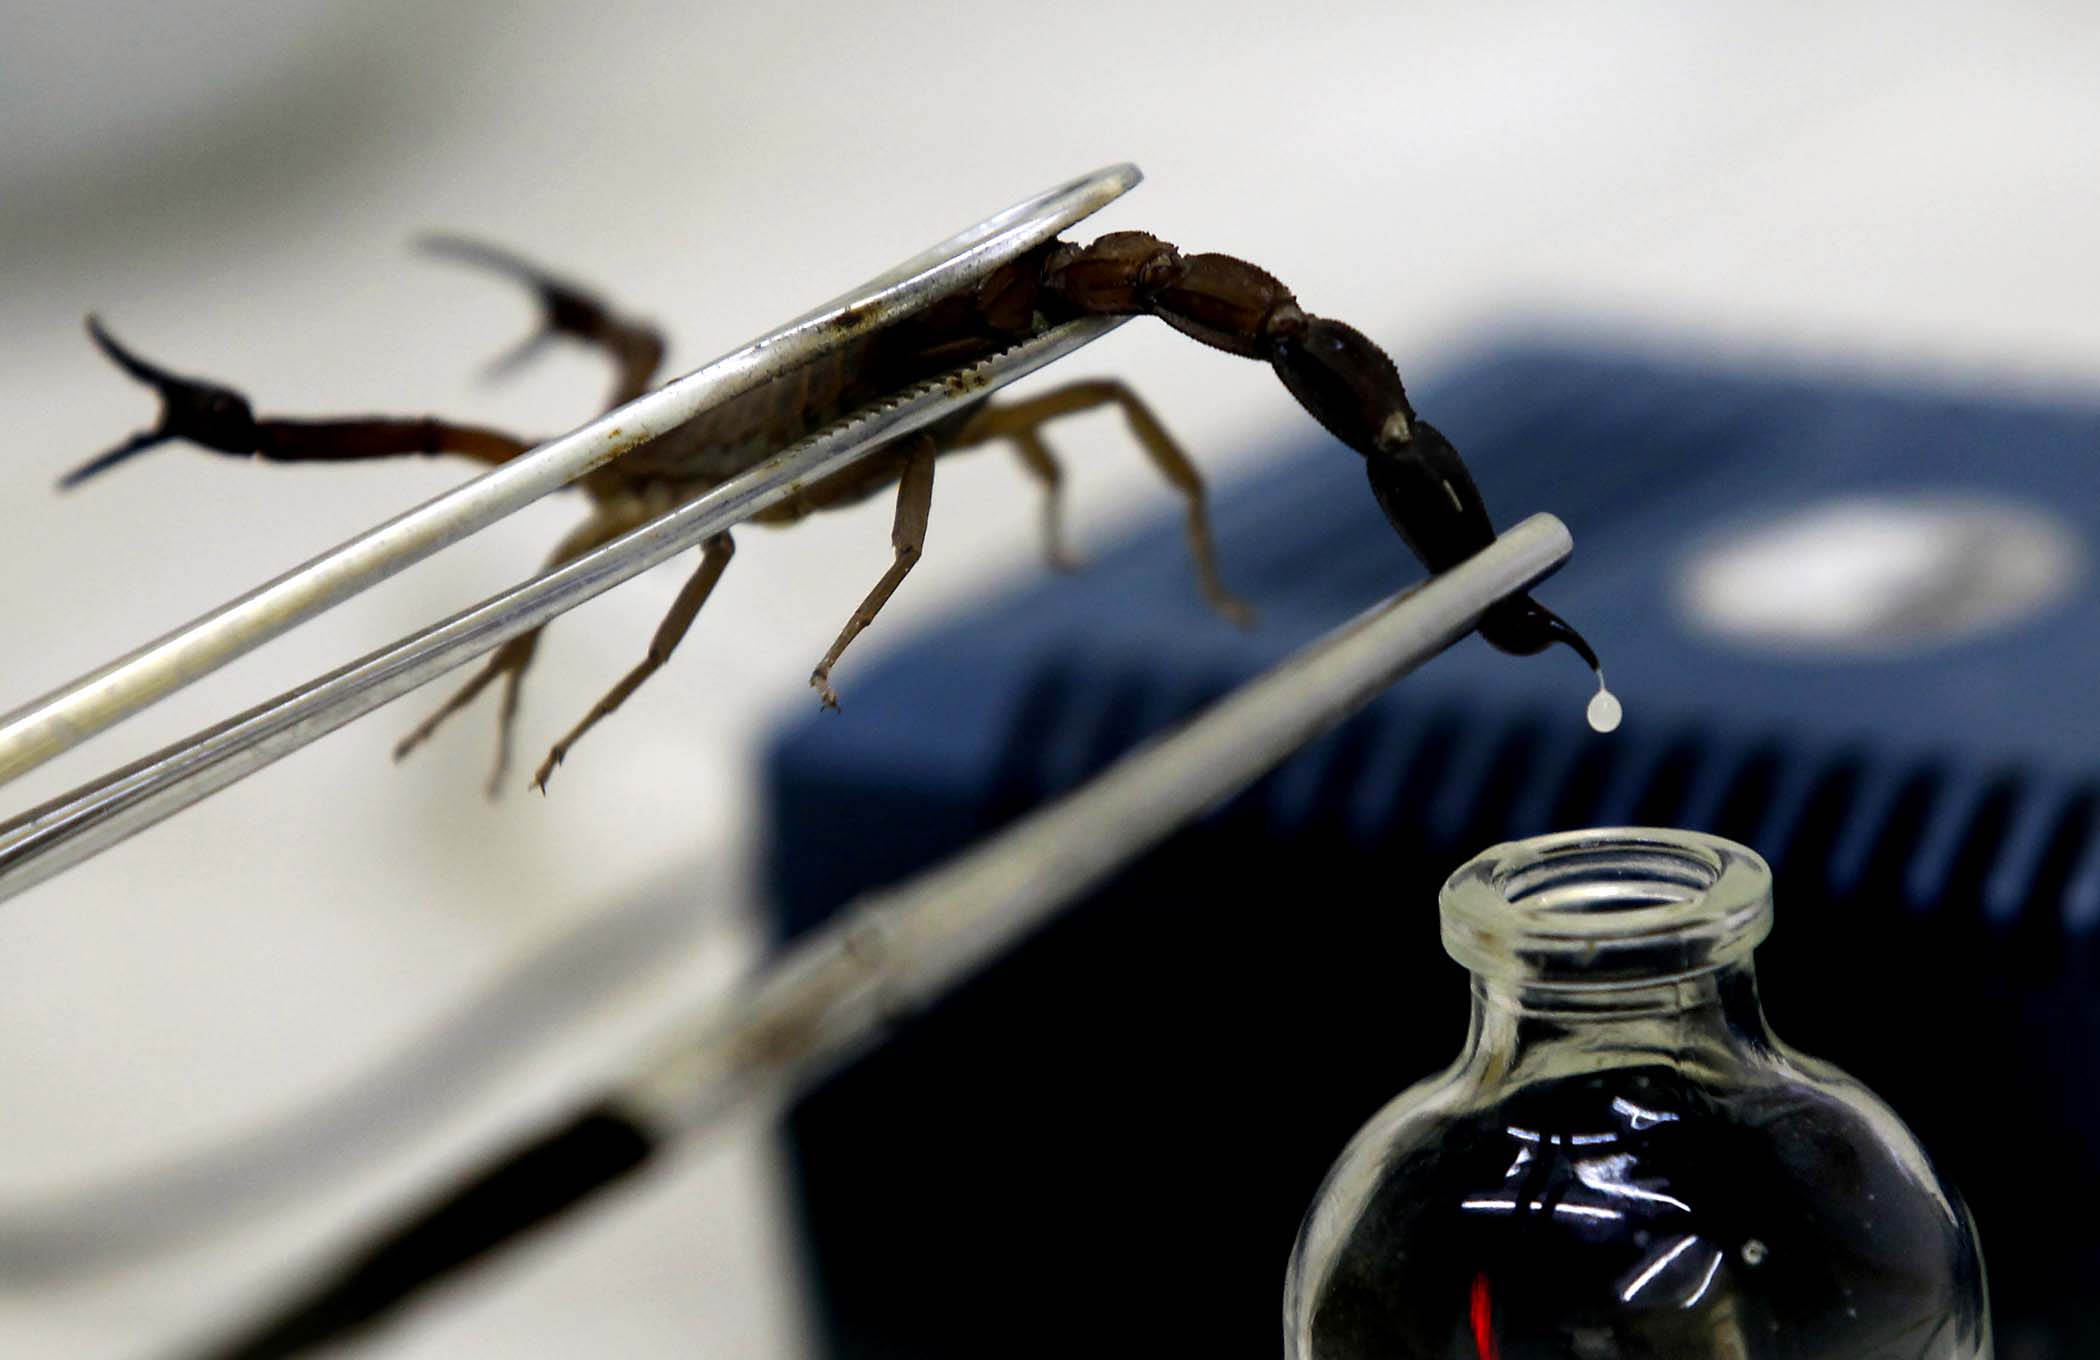 A technician extracts venom from a scorpion at Labiofam Laboratories in Santa Clara